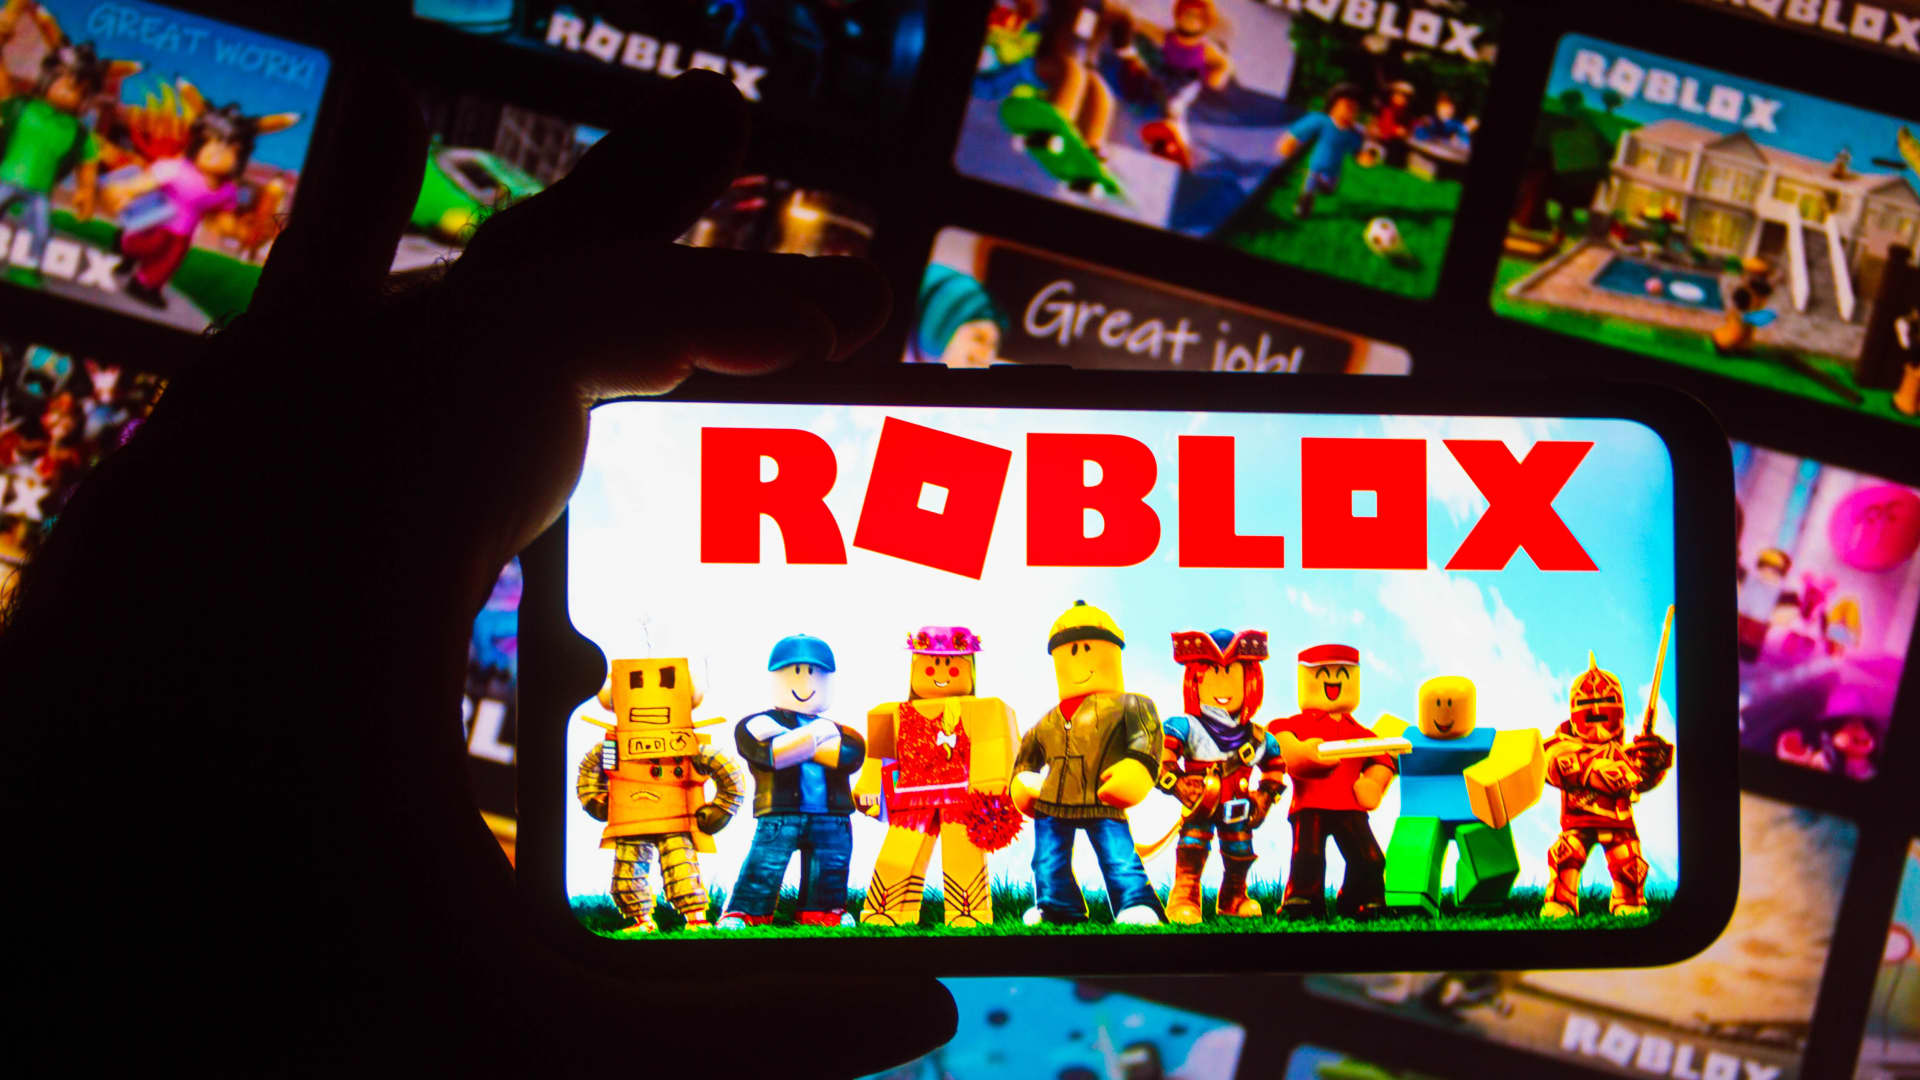 Roblox investors playing a dangerous game as Fortnite and Meta